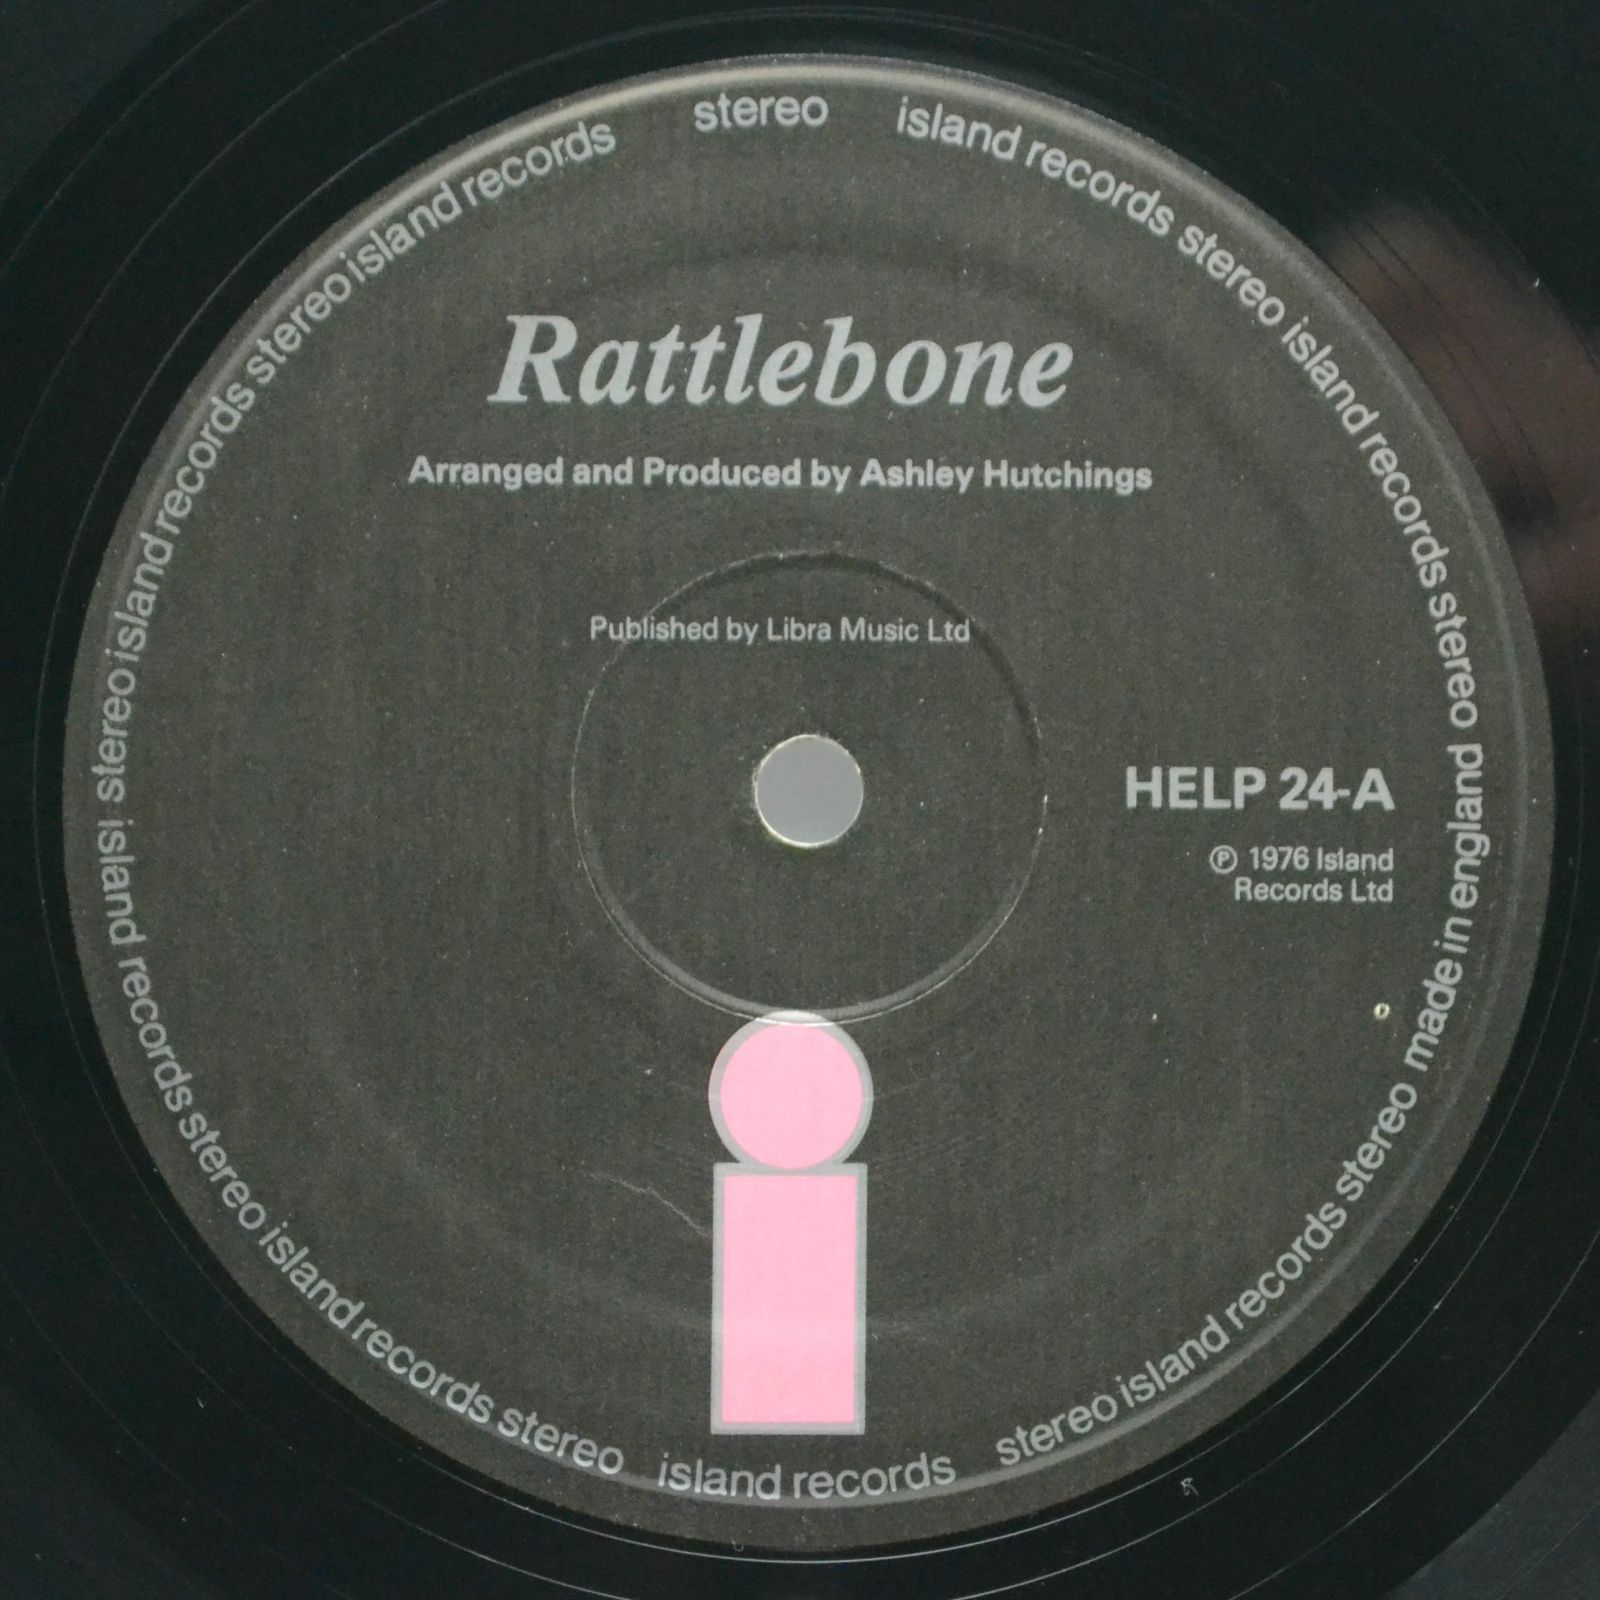 Ashley Hutchings — Rattlebone & Ploughjack (1-st, UK), 1976